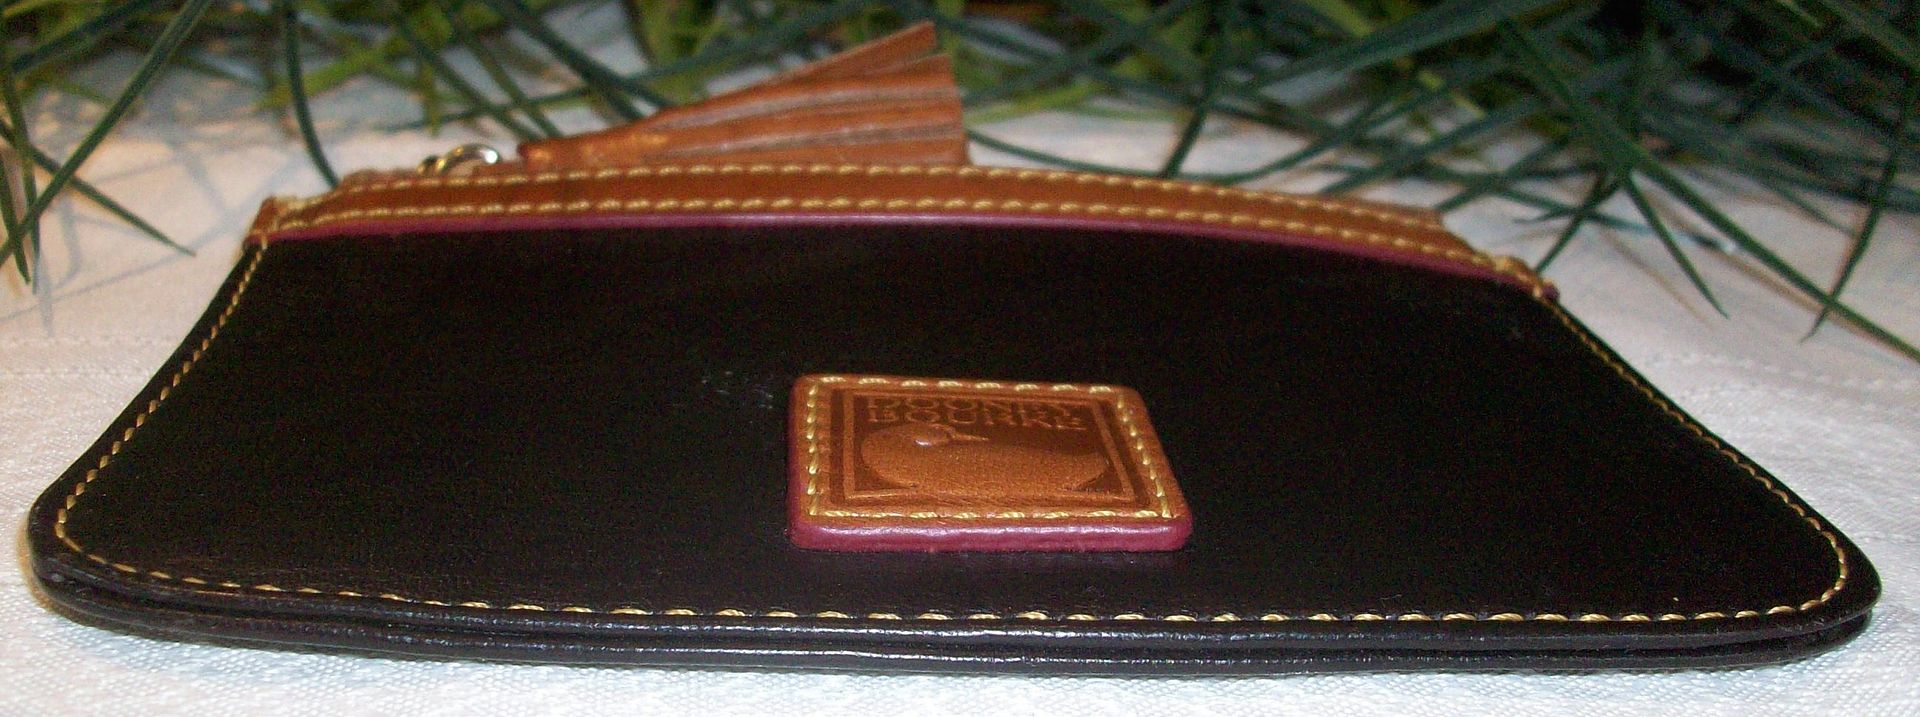 dooney textured leather zip top coin purse black bottom photo 100_0654.jpg